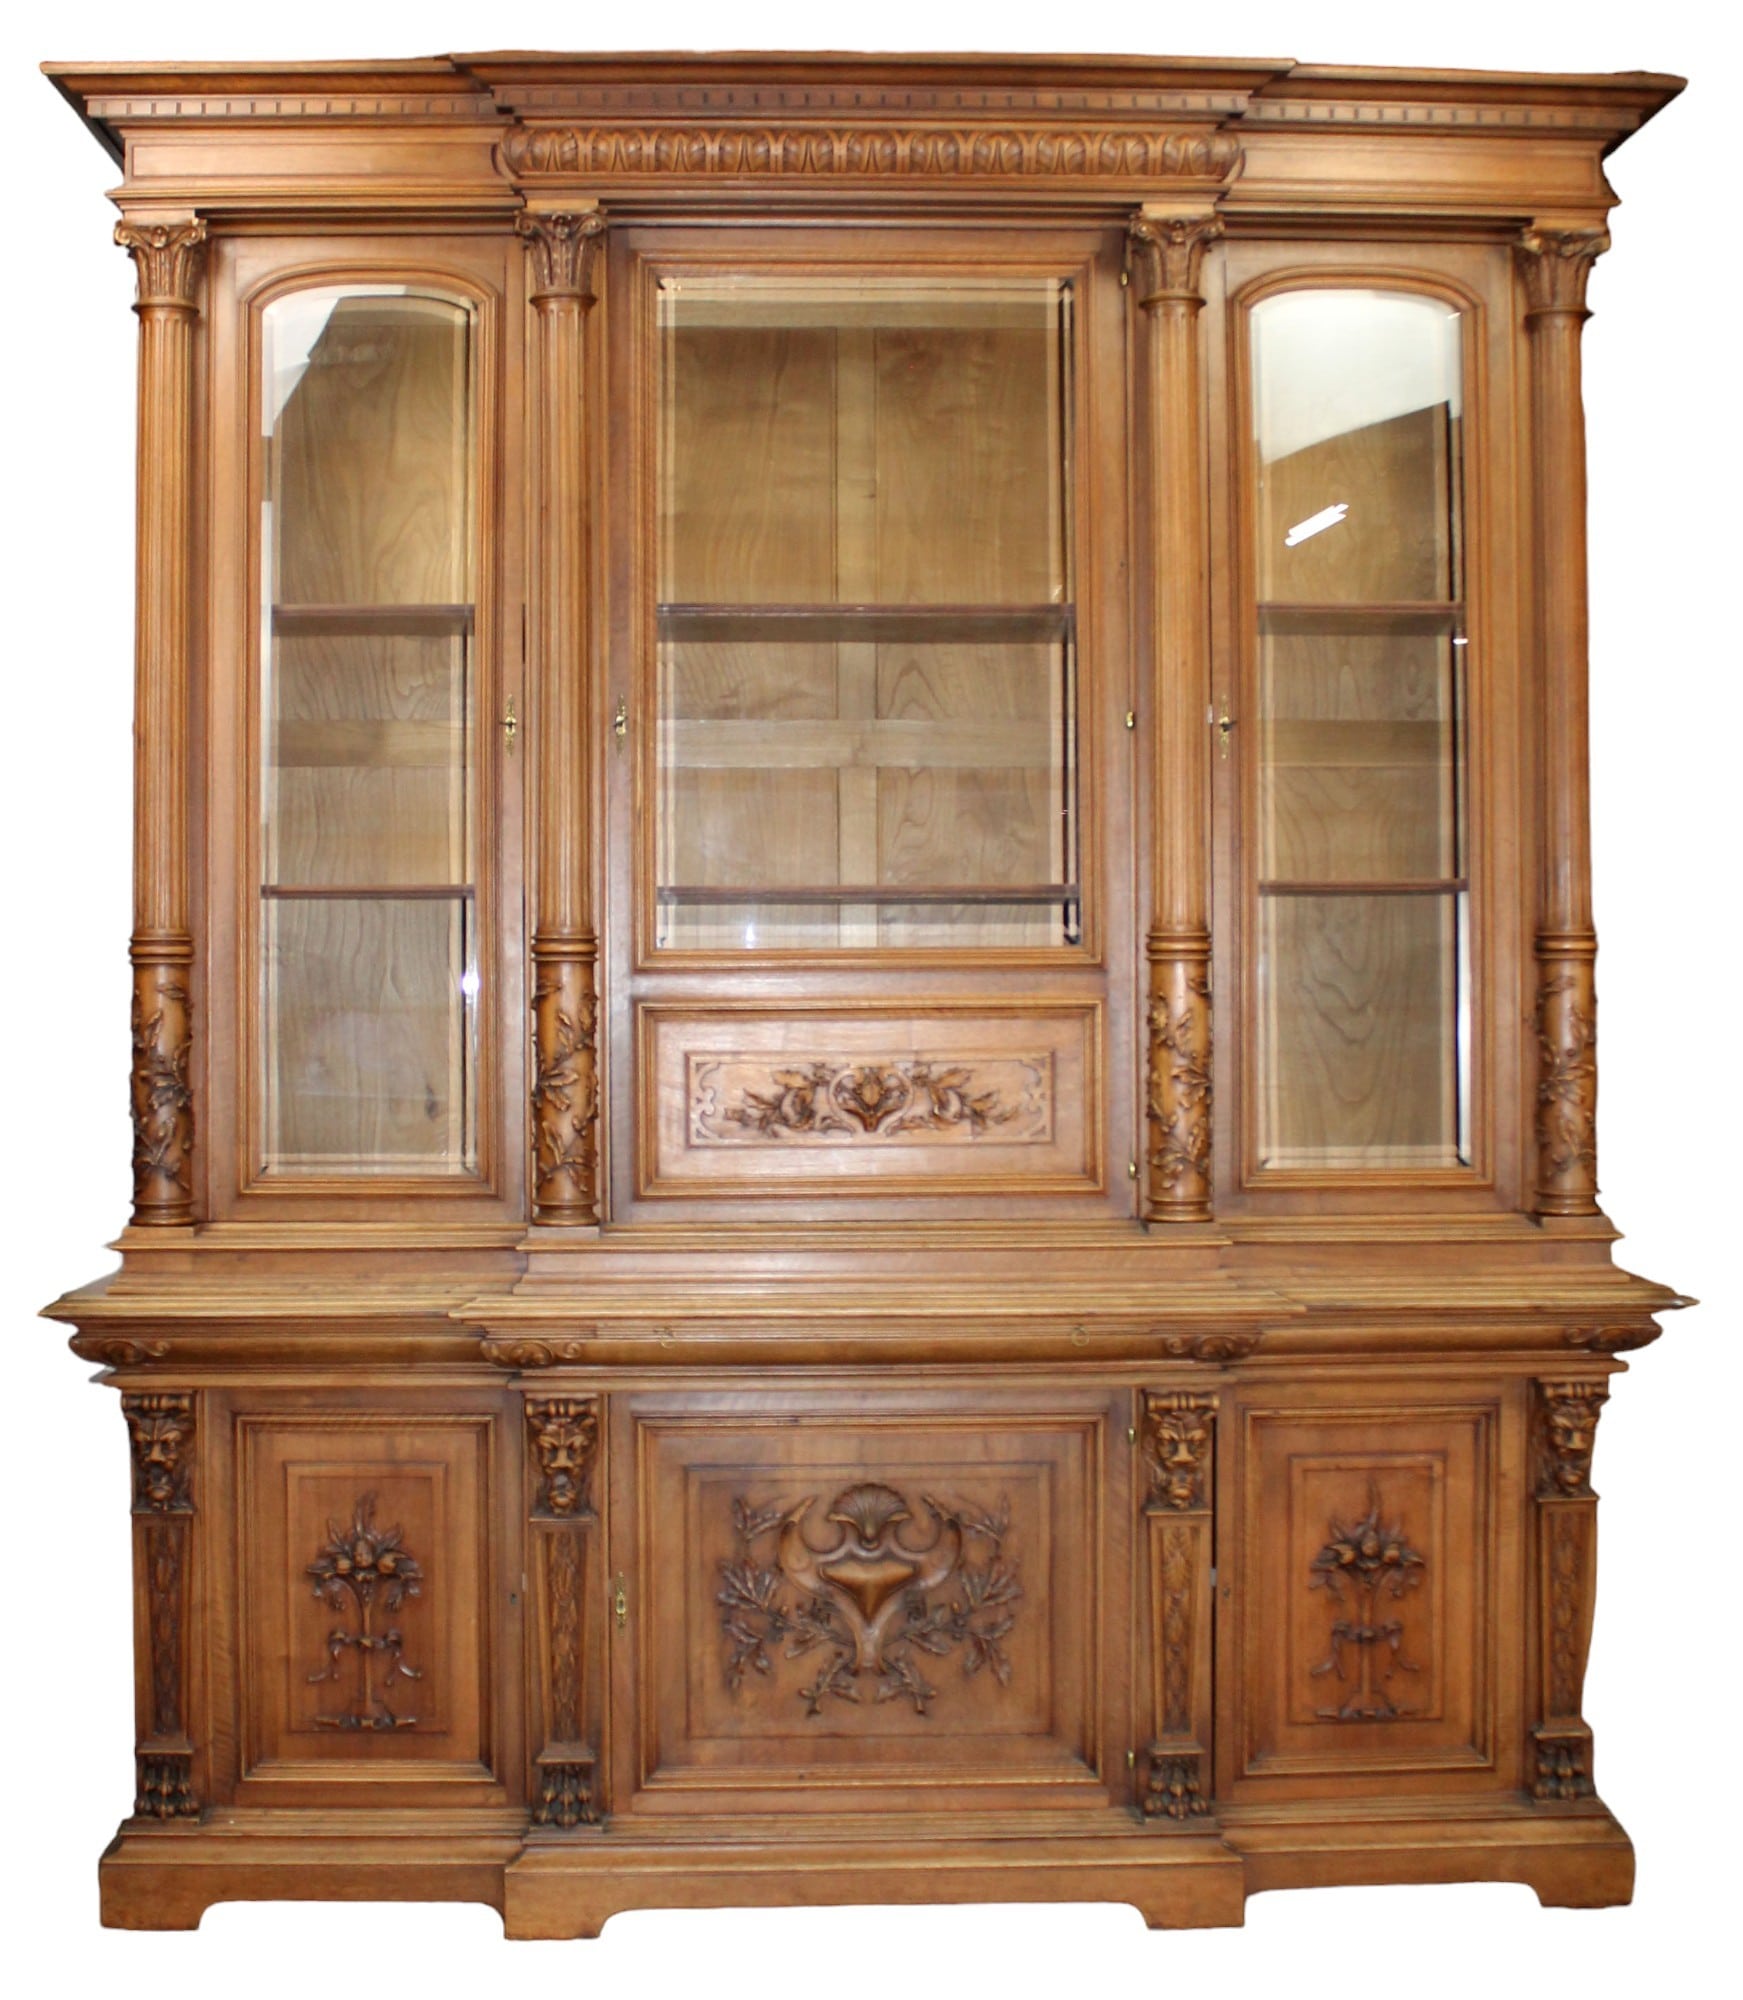 French Renaissance revival bookcase